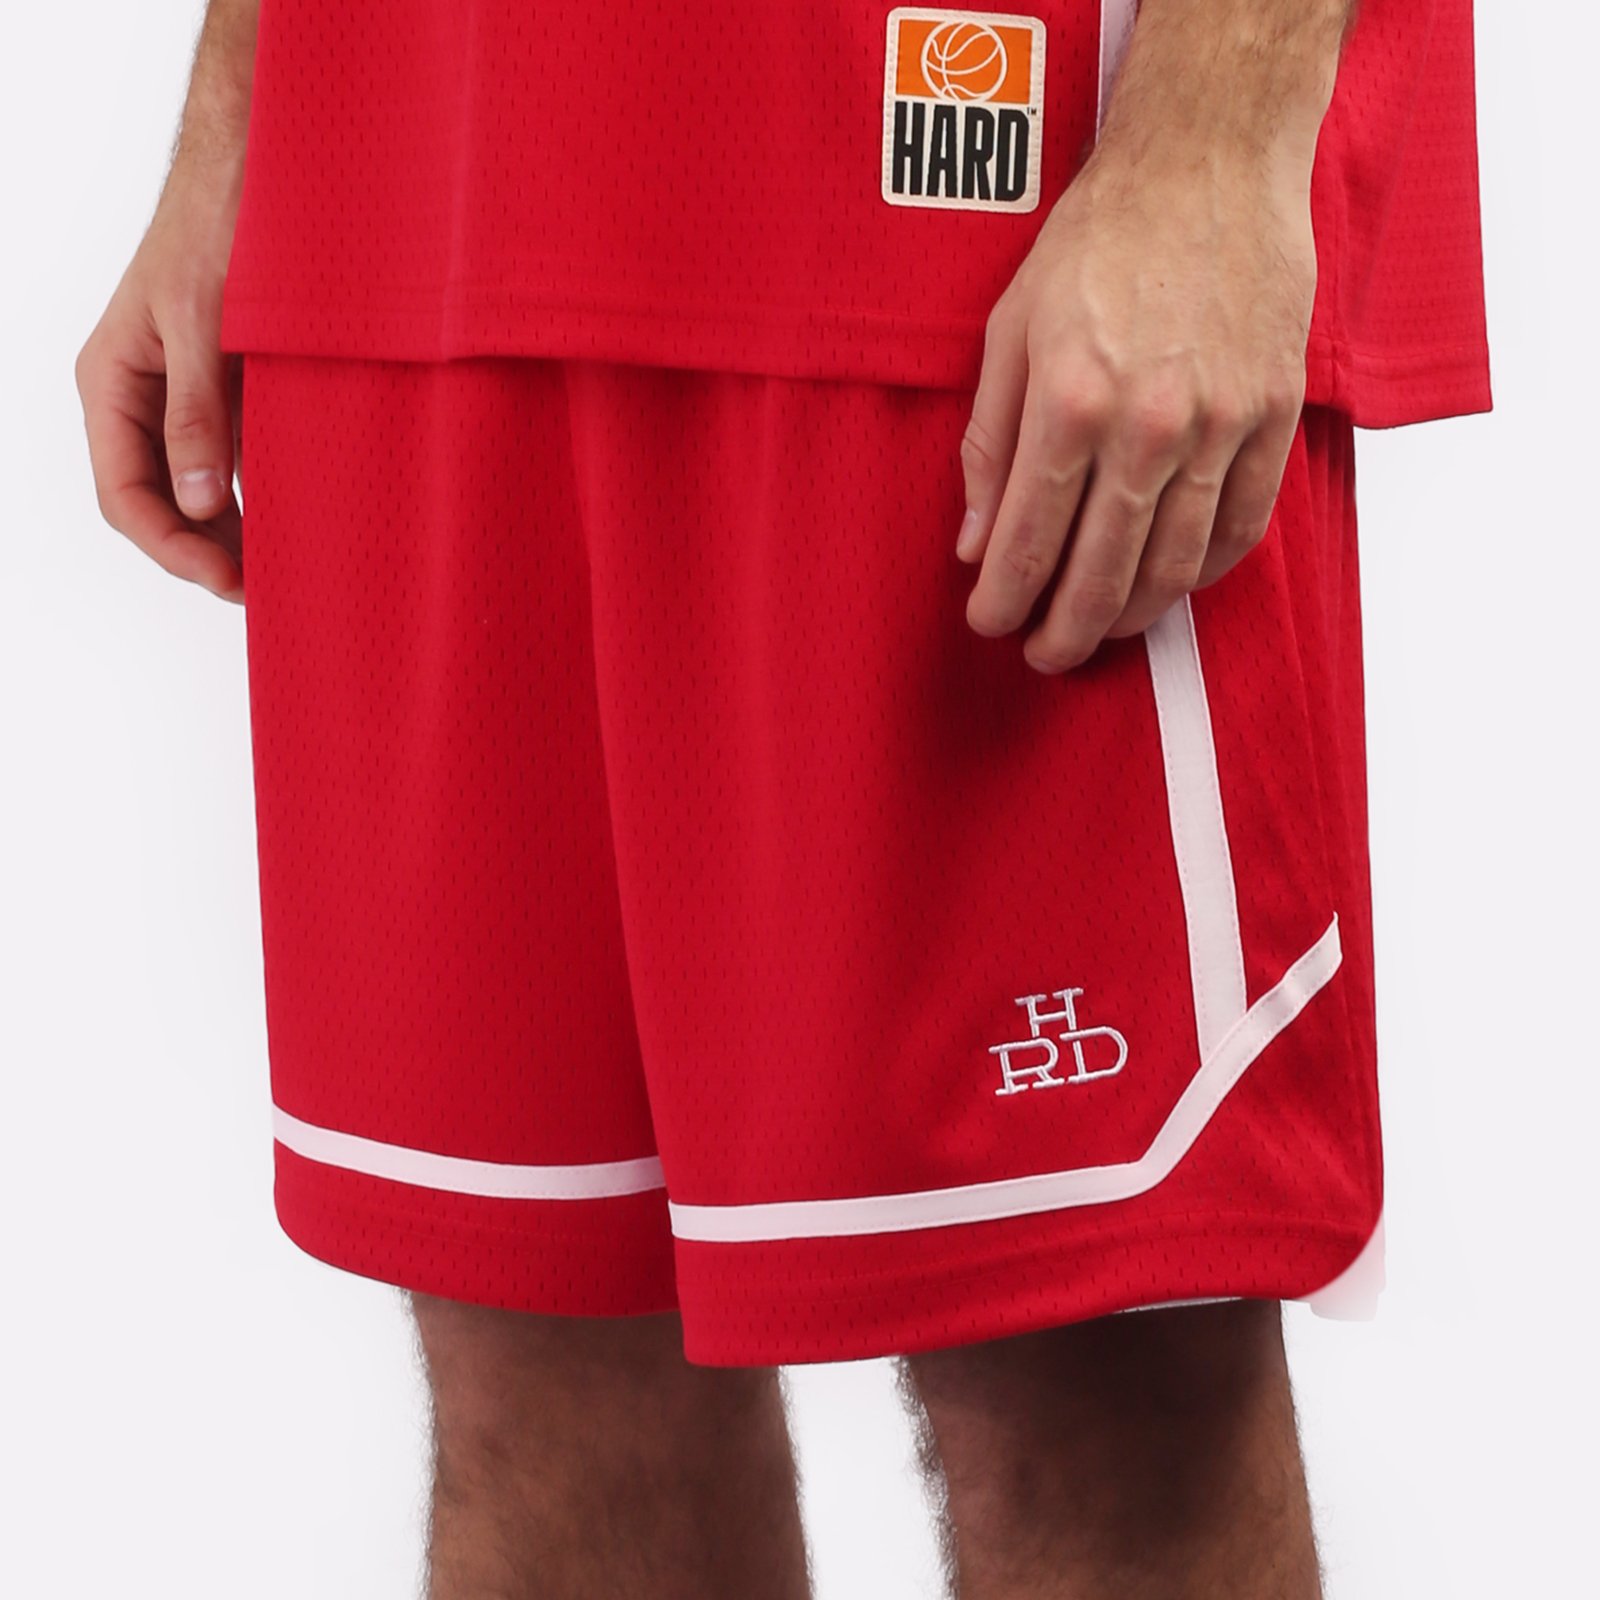 мужские шорты Hard Teammate  (Teammate short-red/wht)  - цена, описание, фото 4